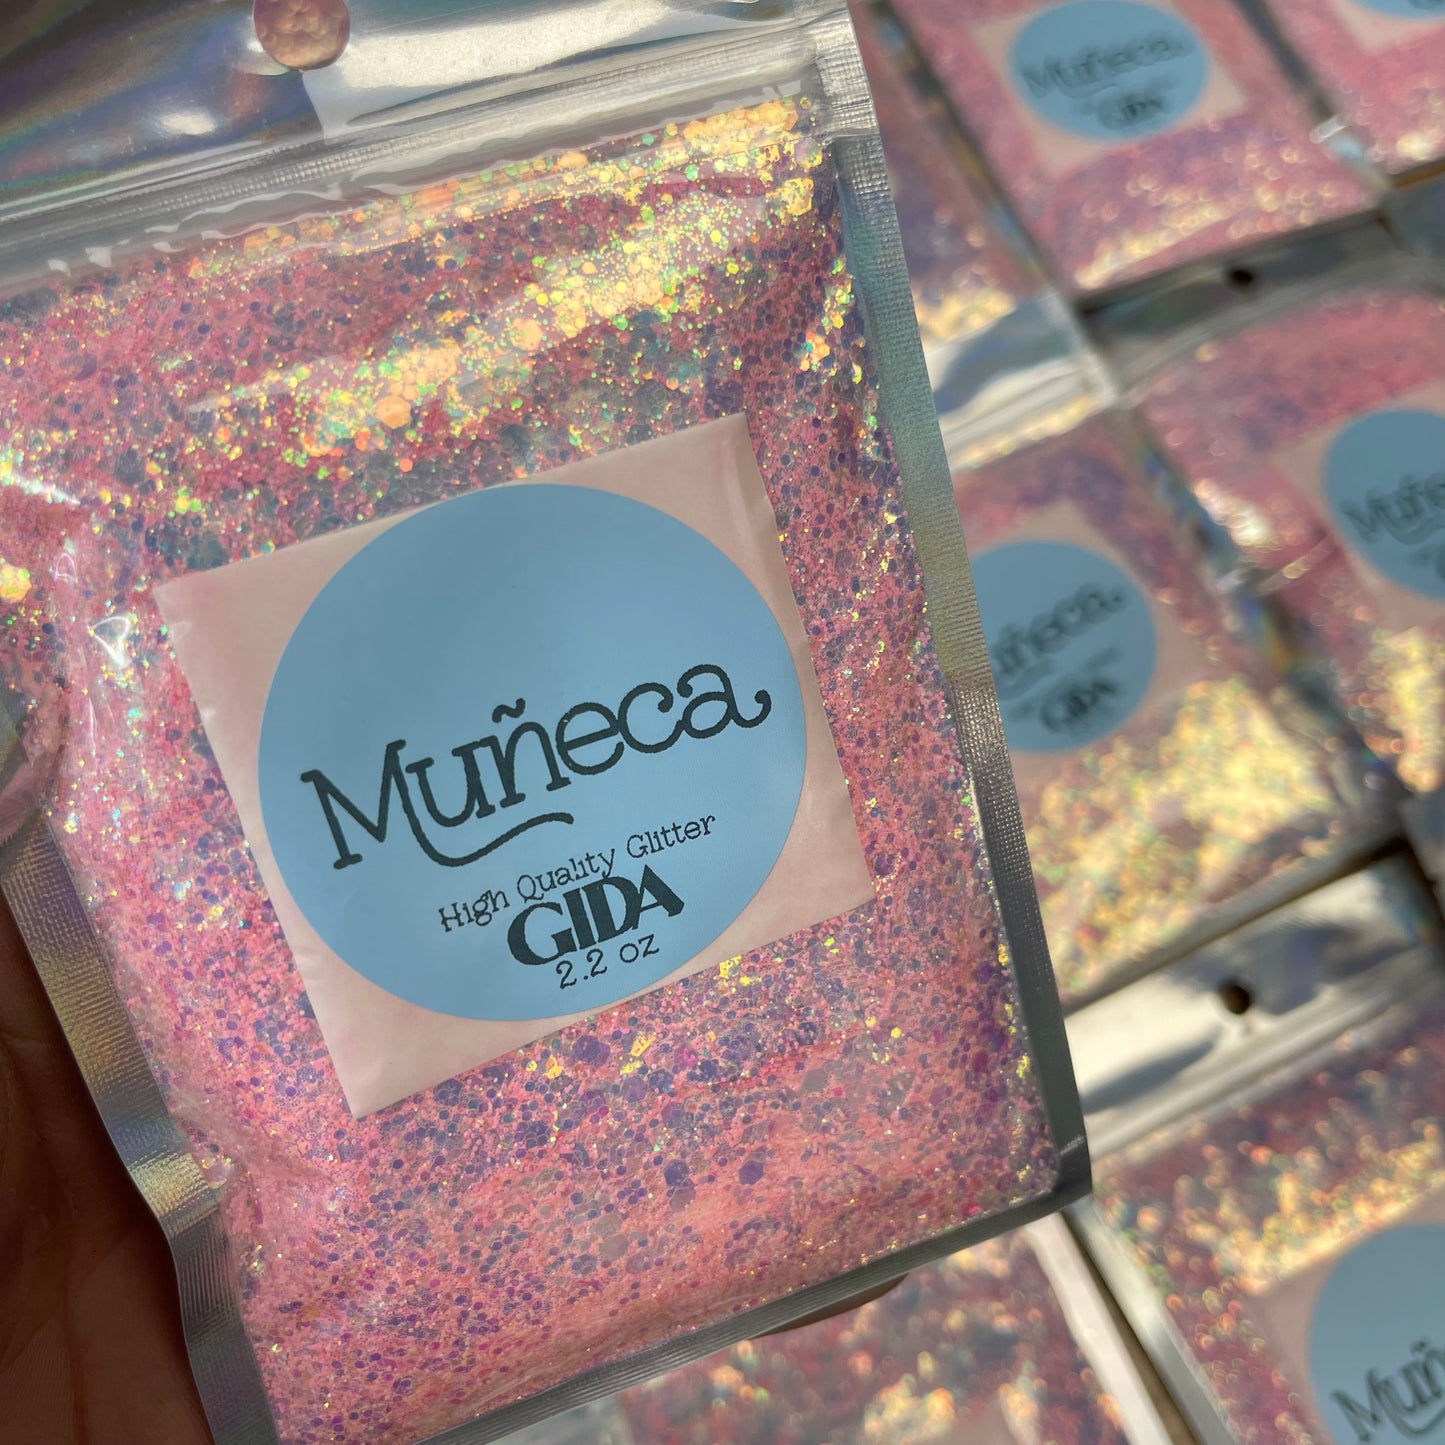 Muñeca Chunky Glitter - 2.2 oz - GIDA DESIGN 